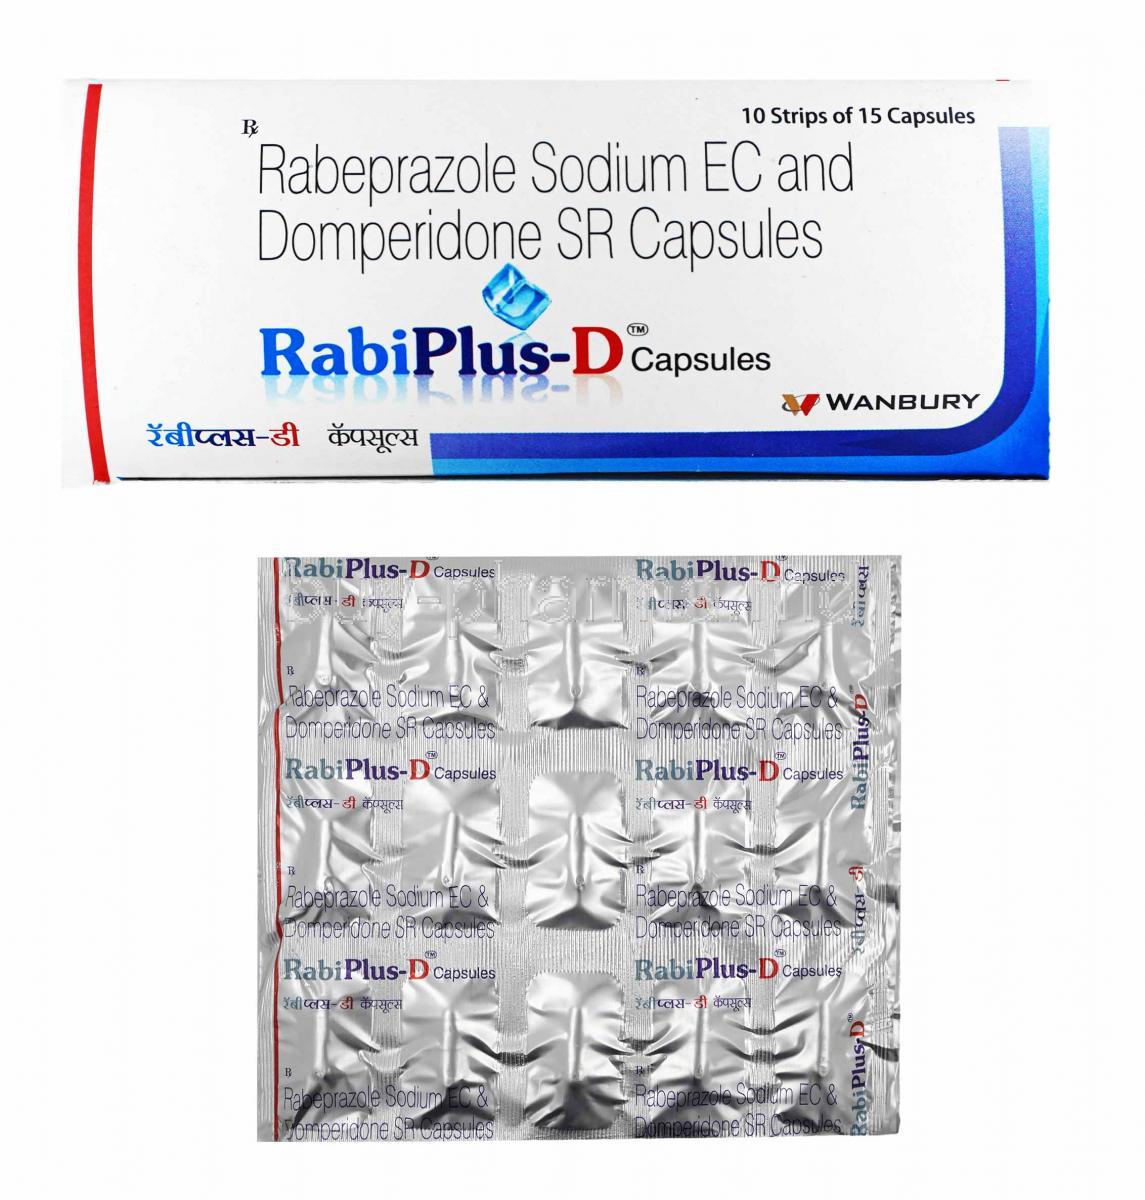 RabiPlus-D, Domperidone and Rabeprazole box and capsules